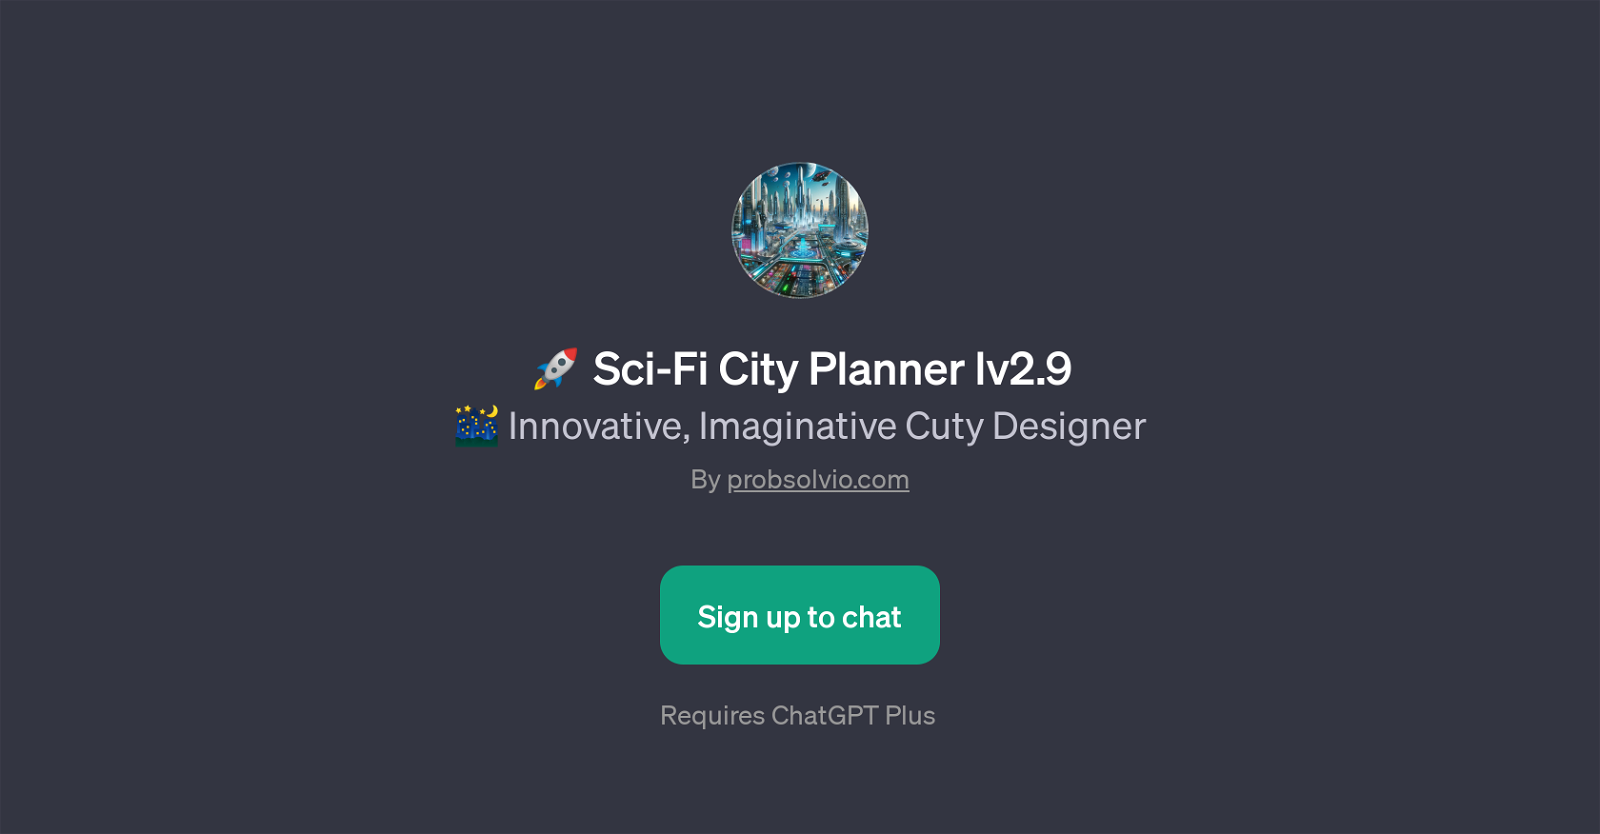 Sci-Fi City Planner lv2.9 website